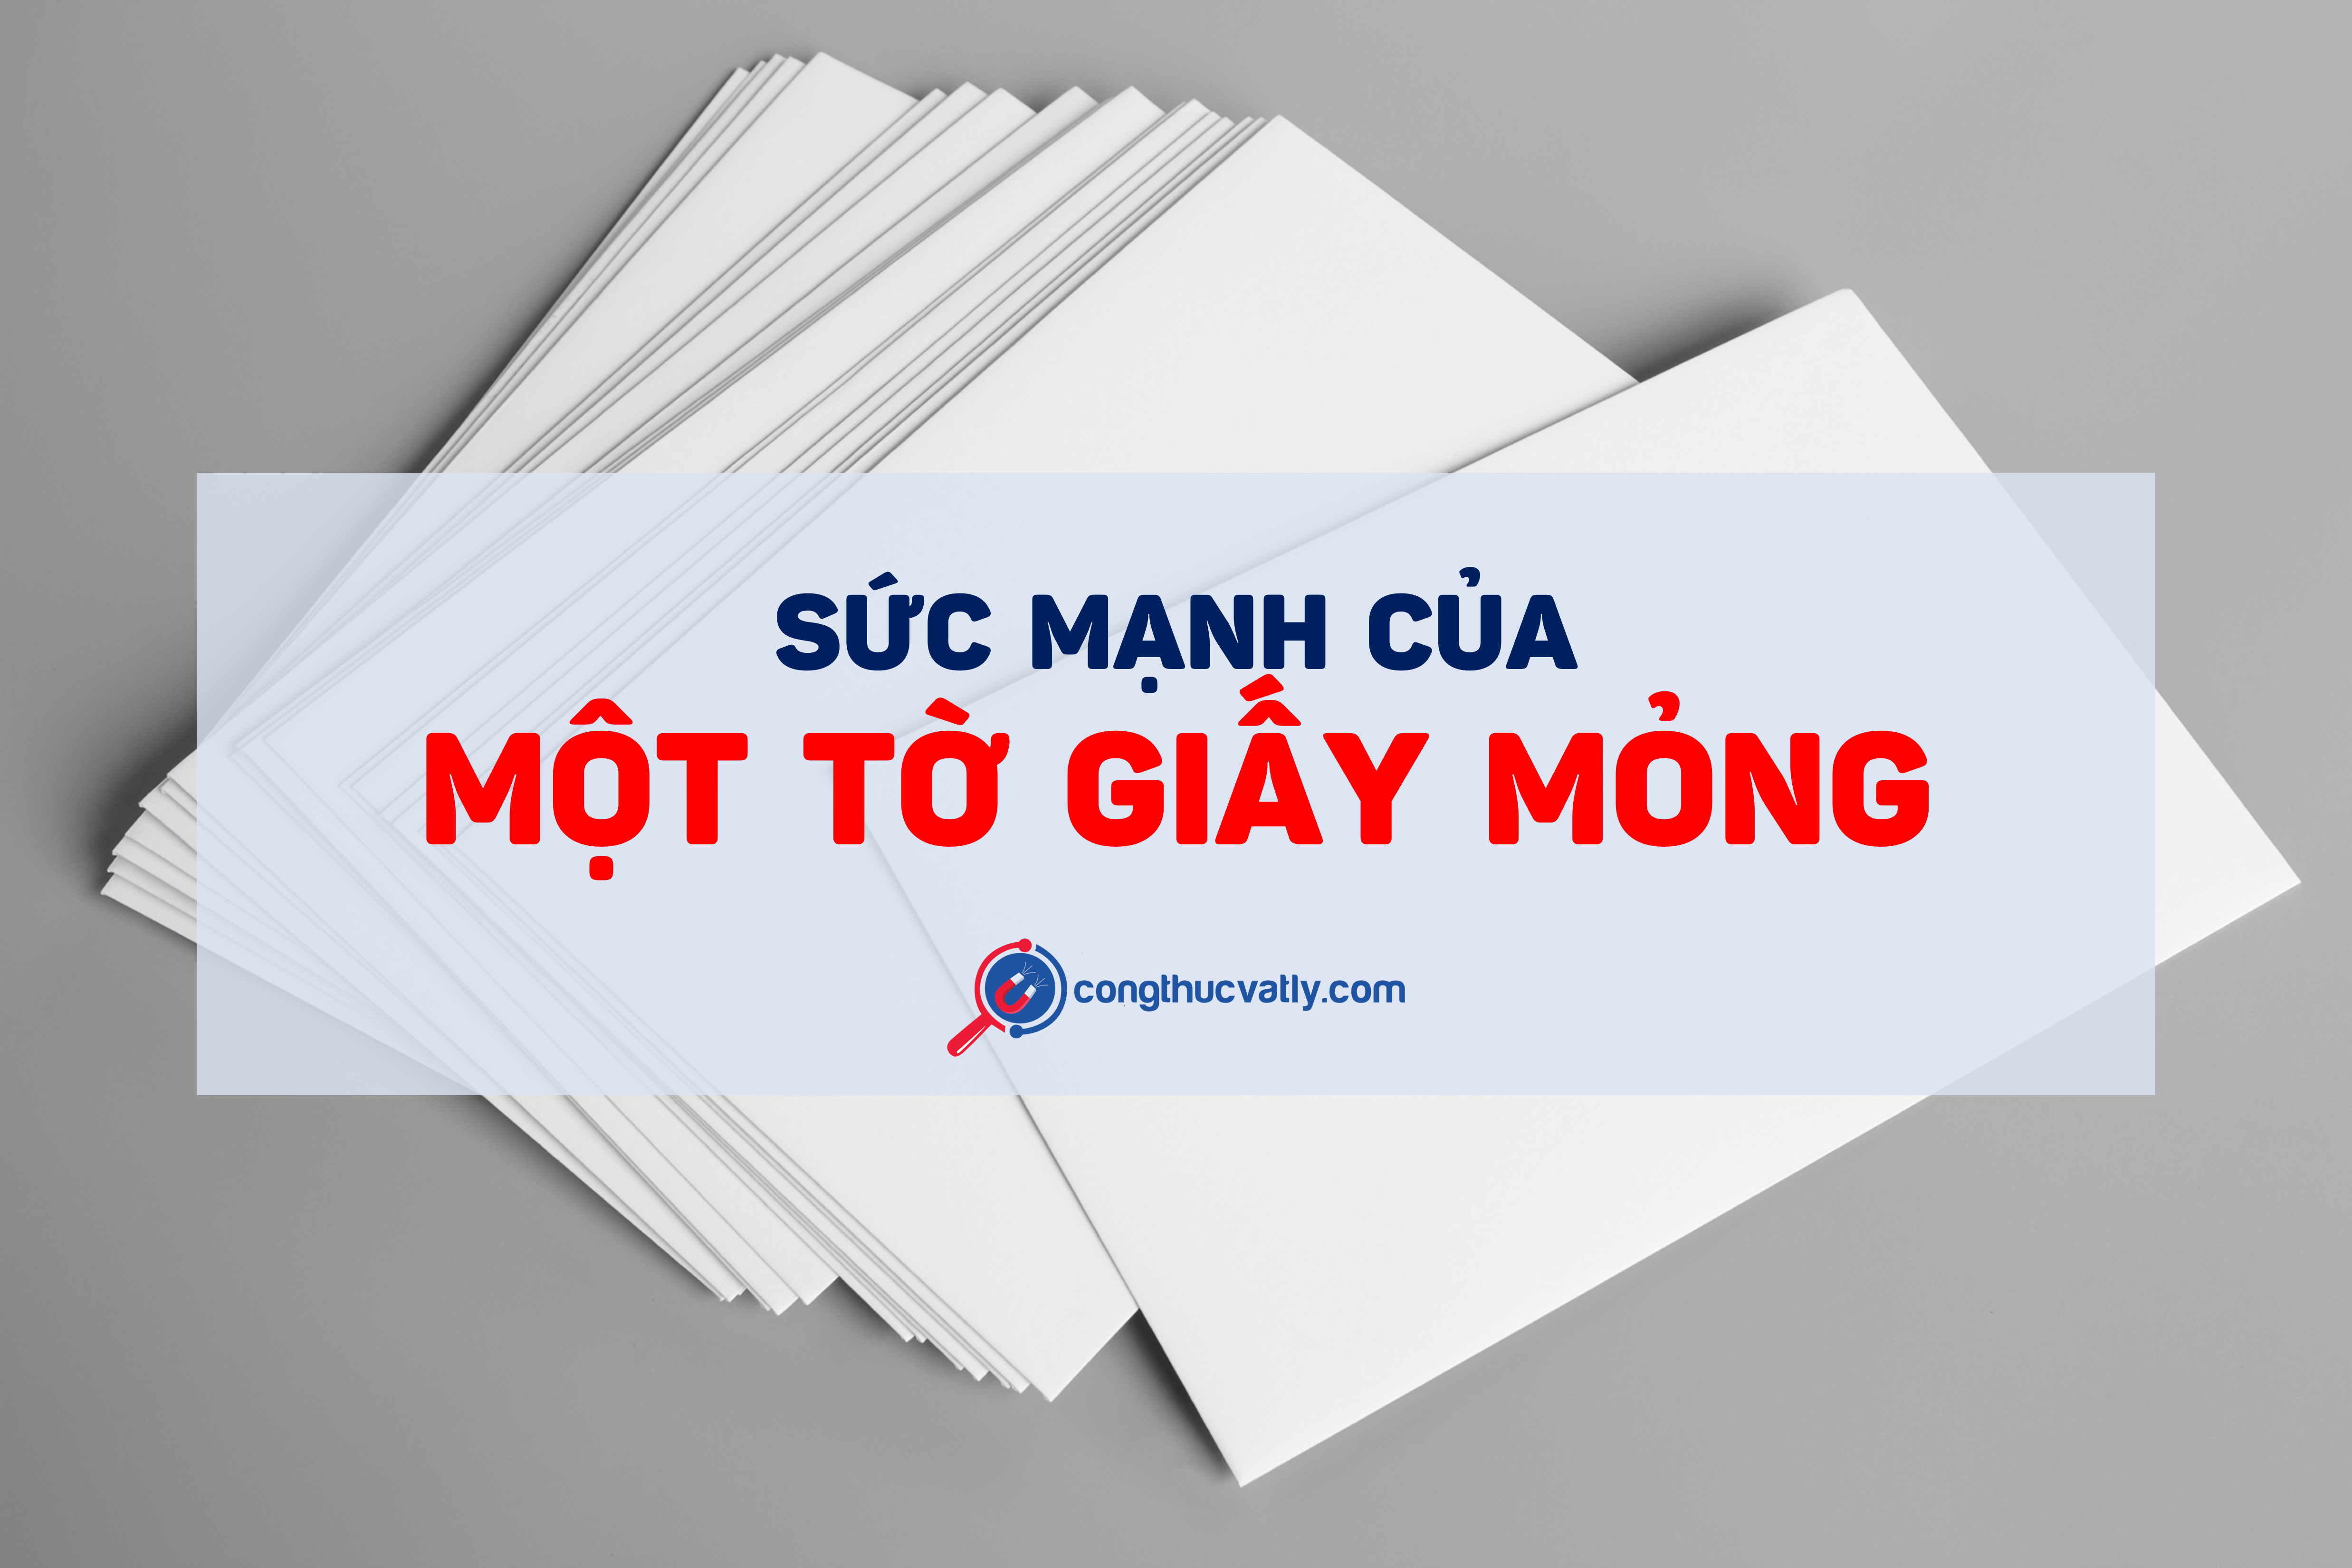 mot-to-giay-mong-co-the-cat-mot-vat-khong-134